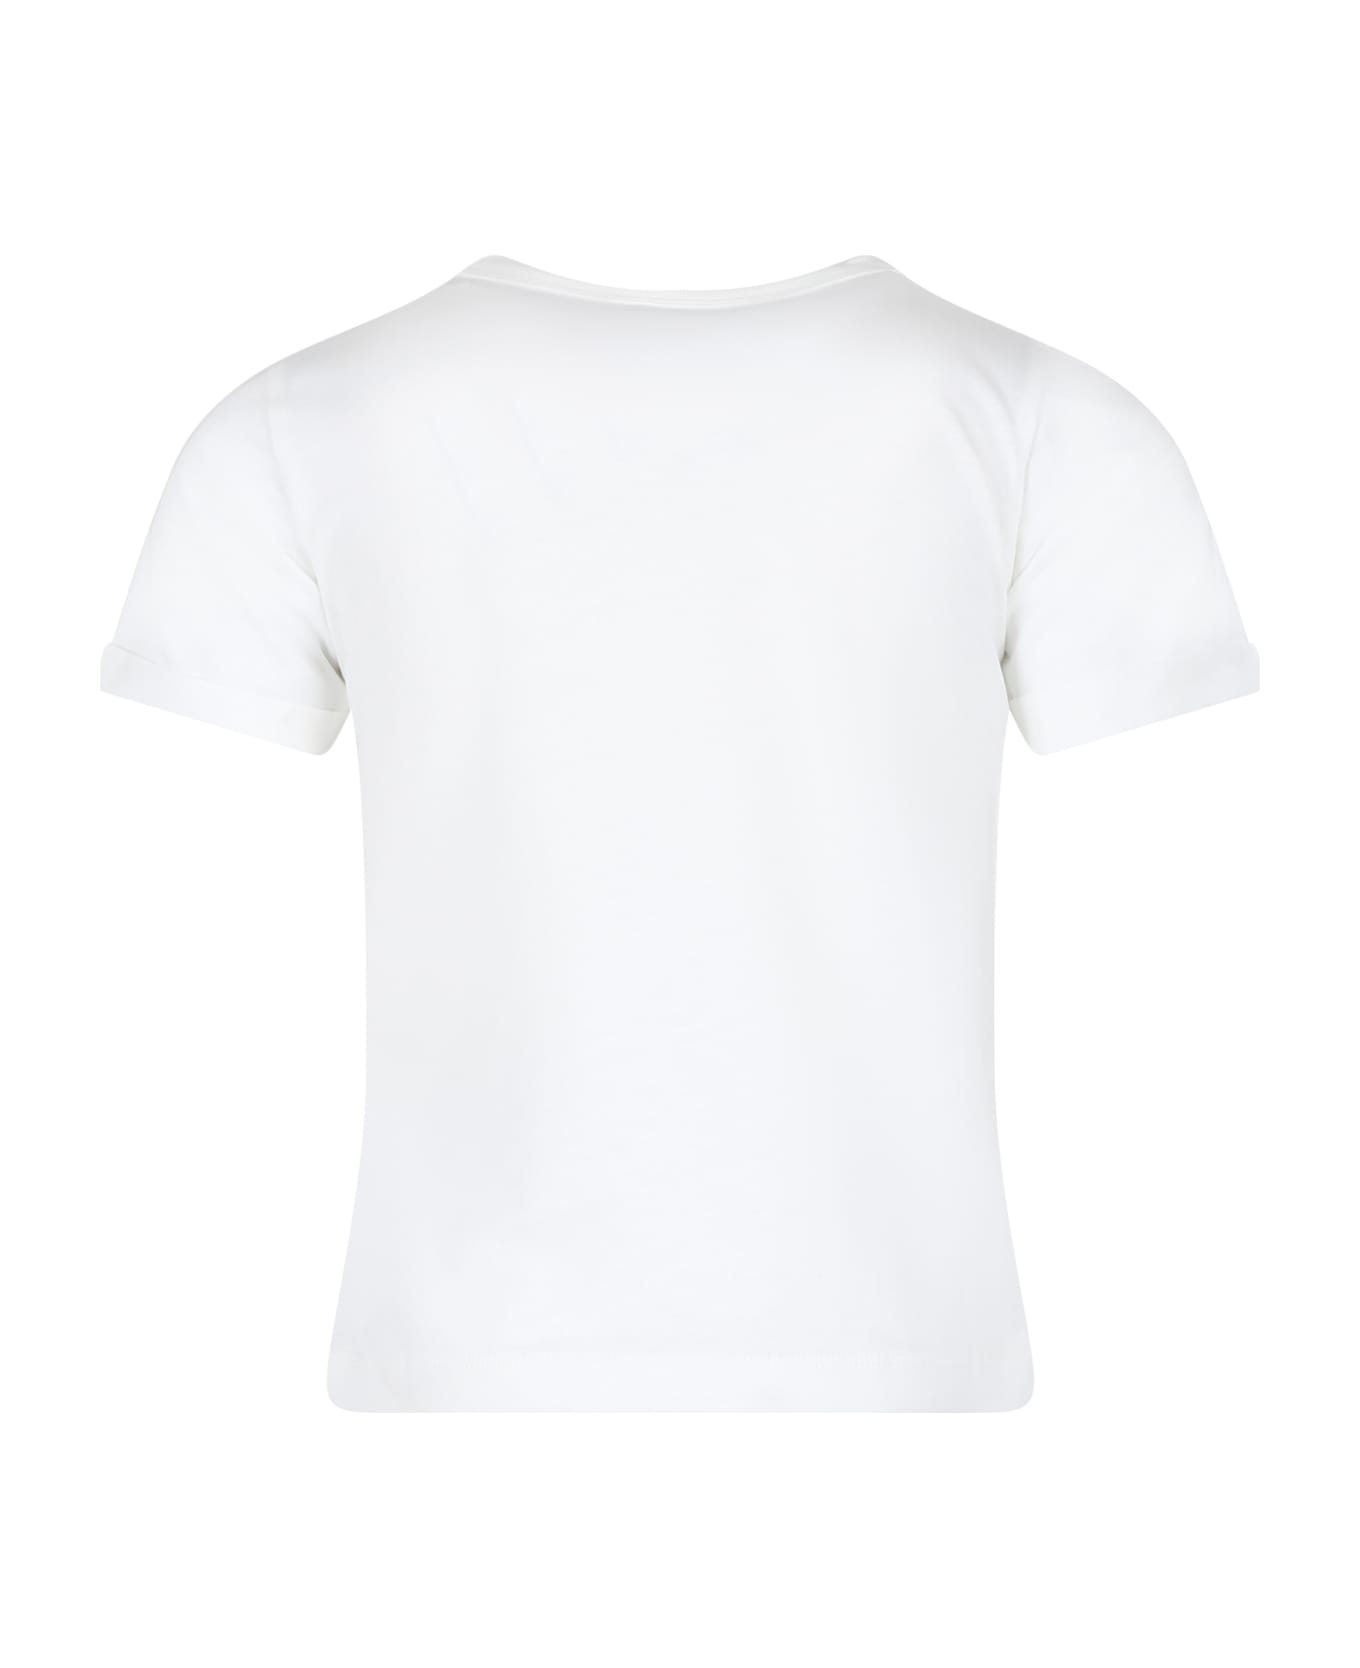 Stella McCartney Kids White T-shirt For Girl With Star - White